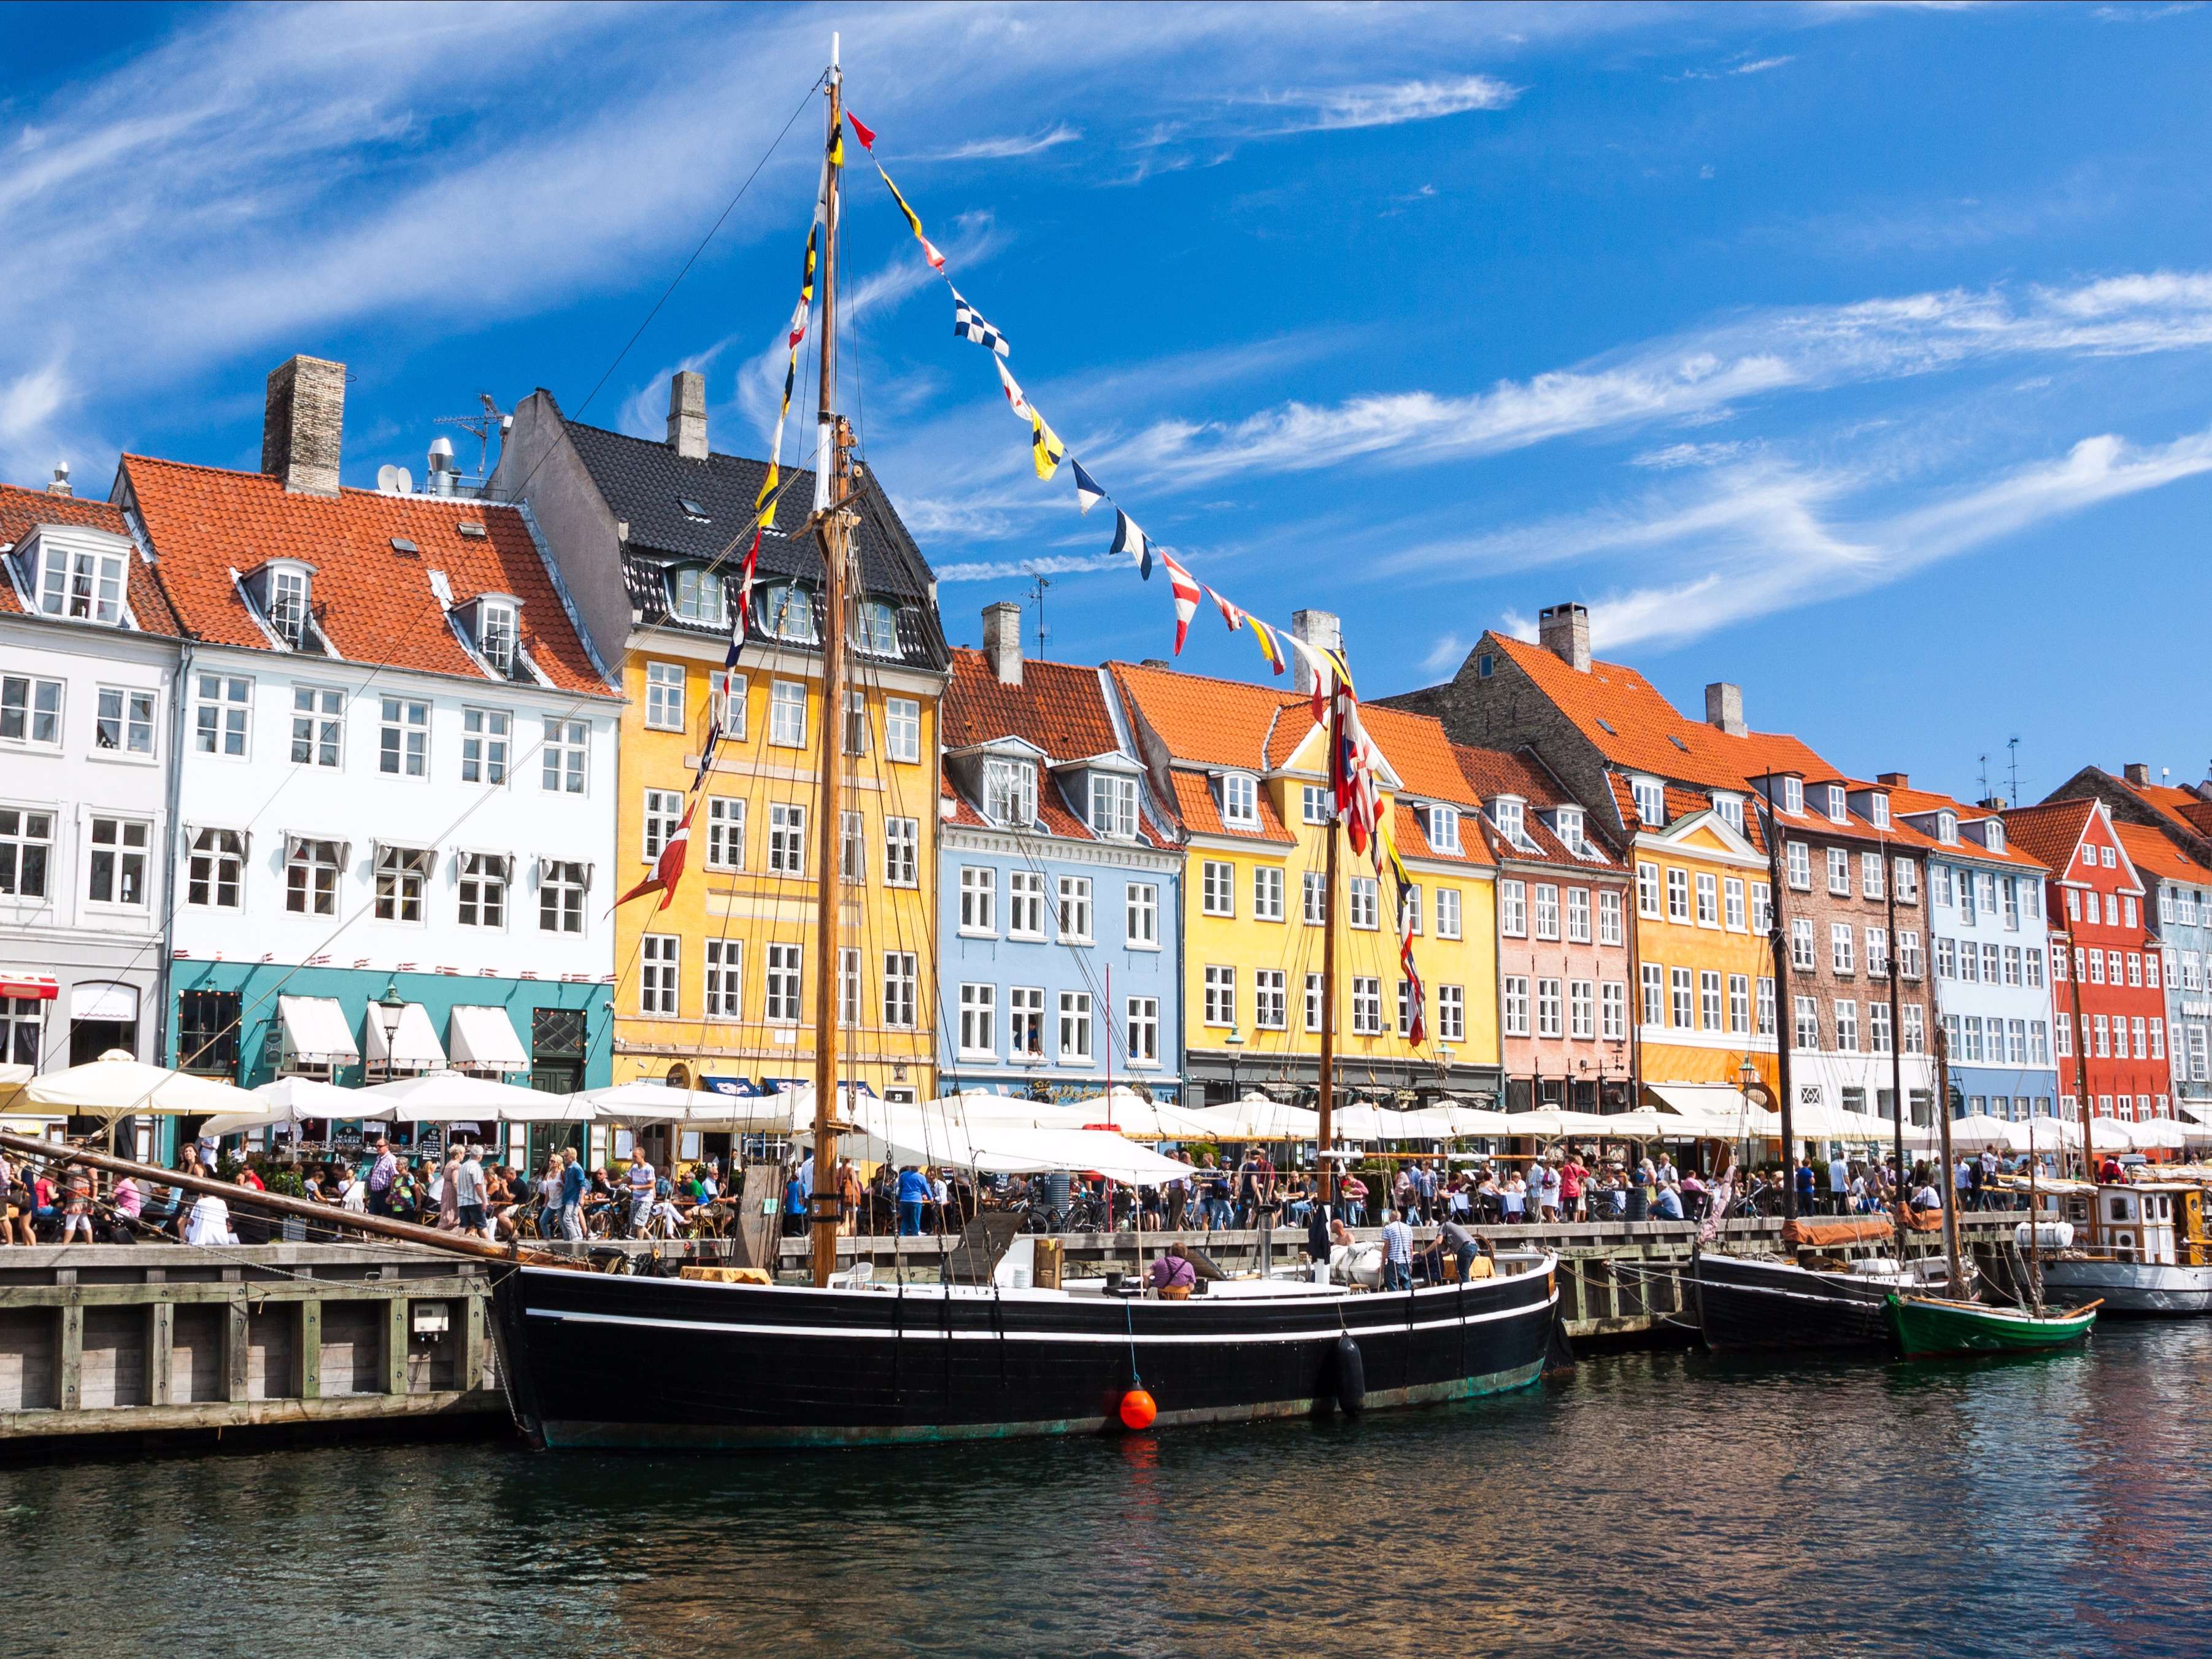 Копенгаген. Нюхавн (г. Копенгаген). Королевство Дания. Фридрихсборг Копенгаген. Самый яркий красочный город в Дании.